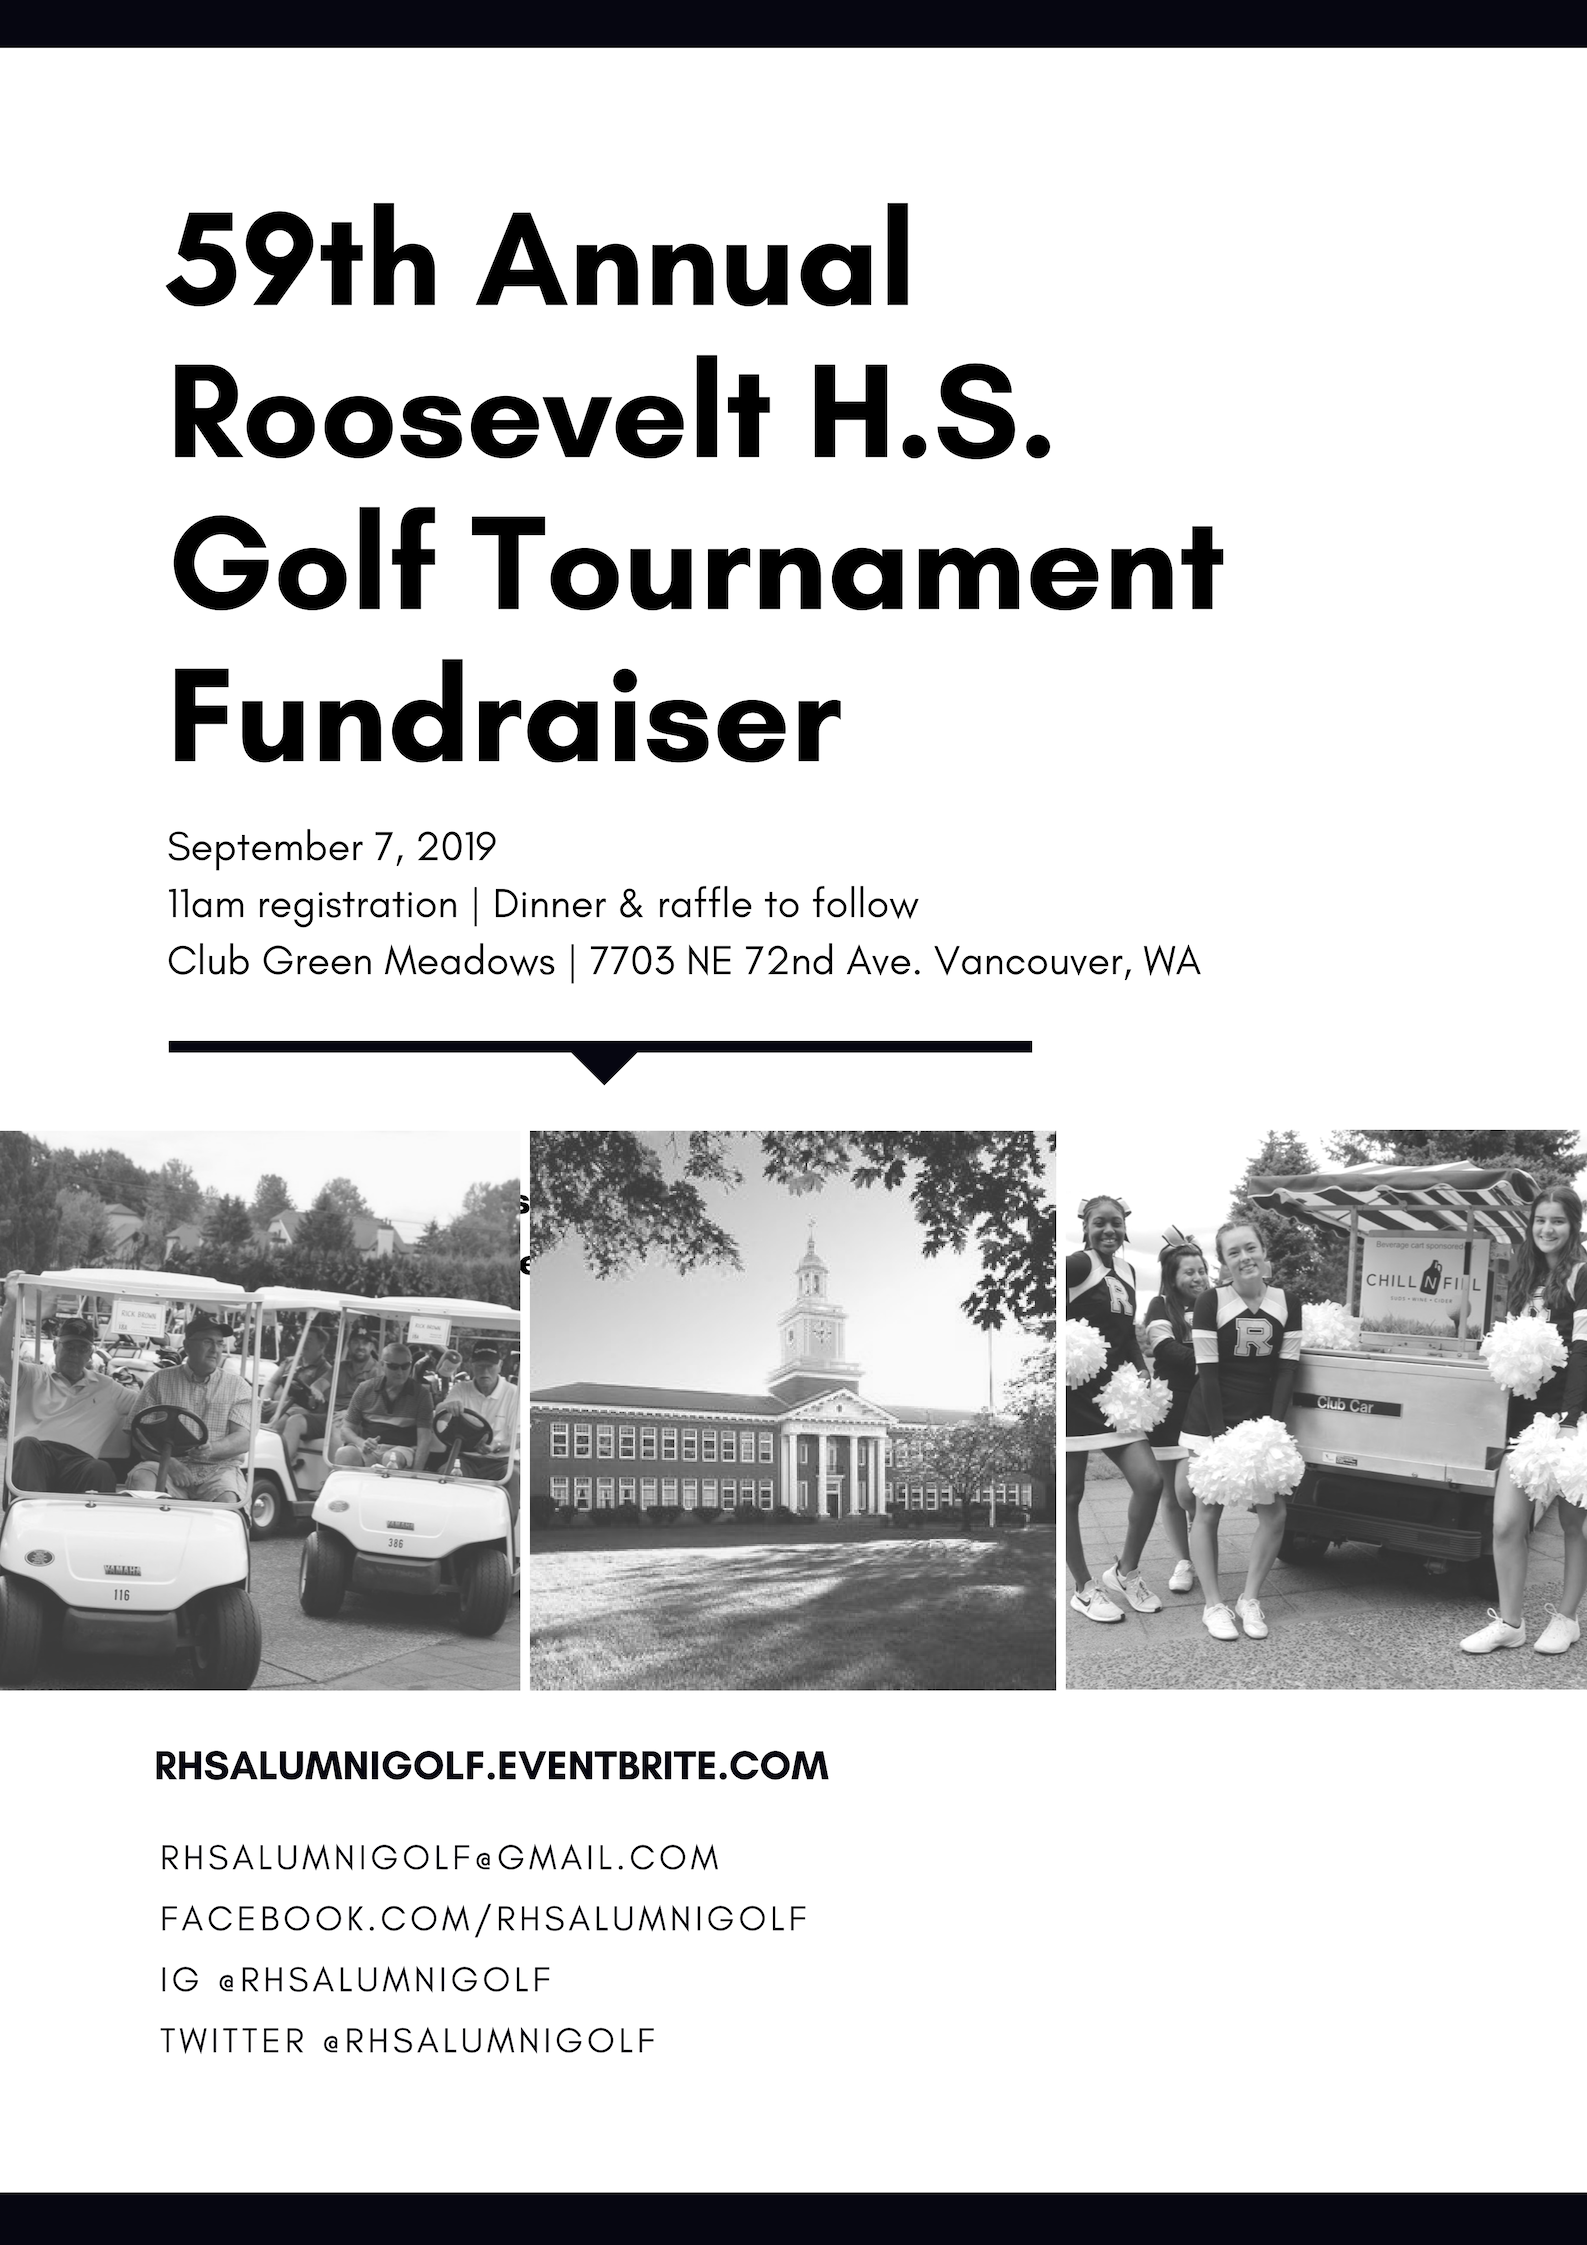 59th Annual Roosevelt Golf Fundraiser